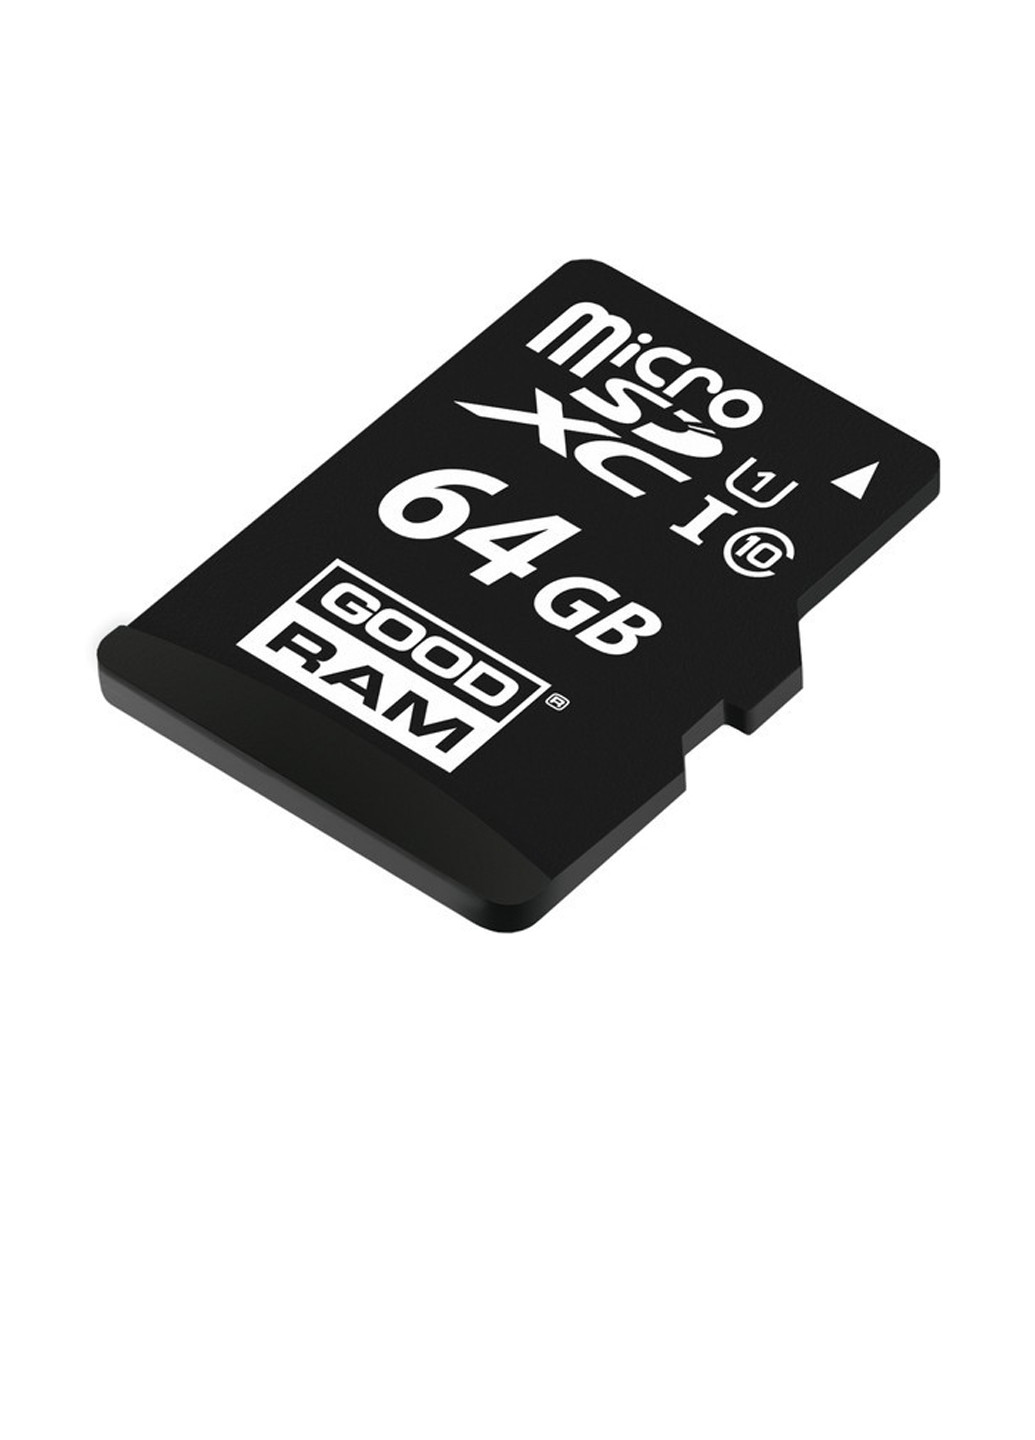 Карта пам'яті microSDHC 64GB C10 UHS-I + SD-adapter (M1AA-0640R12) Goodram карта памяти goodram microsdhc 64gb c10 uhs-i + sd-adapter (m1aa-0640r12) (135316879)